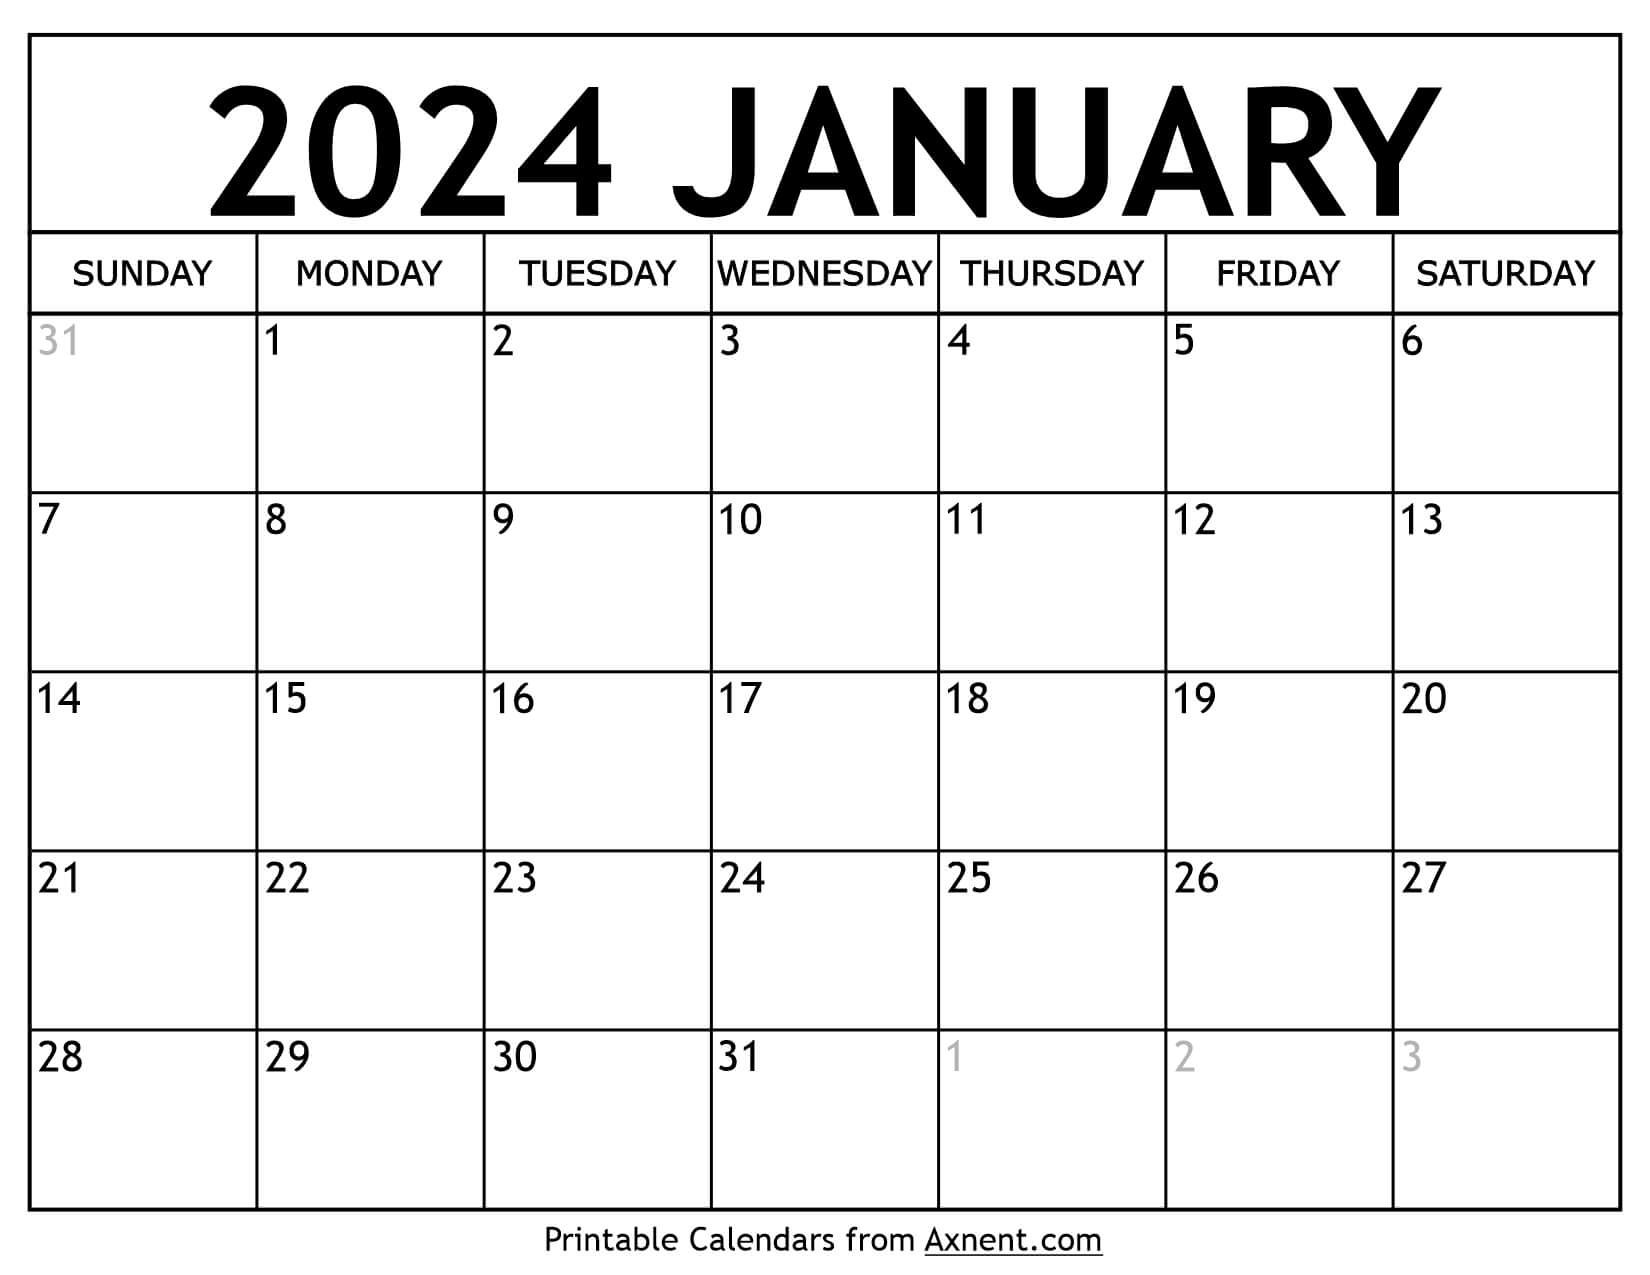 Printable January 2024 Calendar Template - Print Now for Free January 2024 Calendar Printable